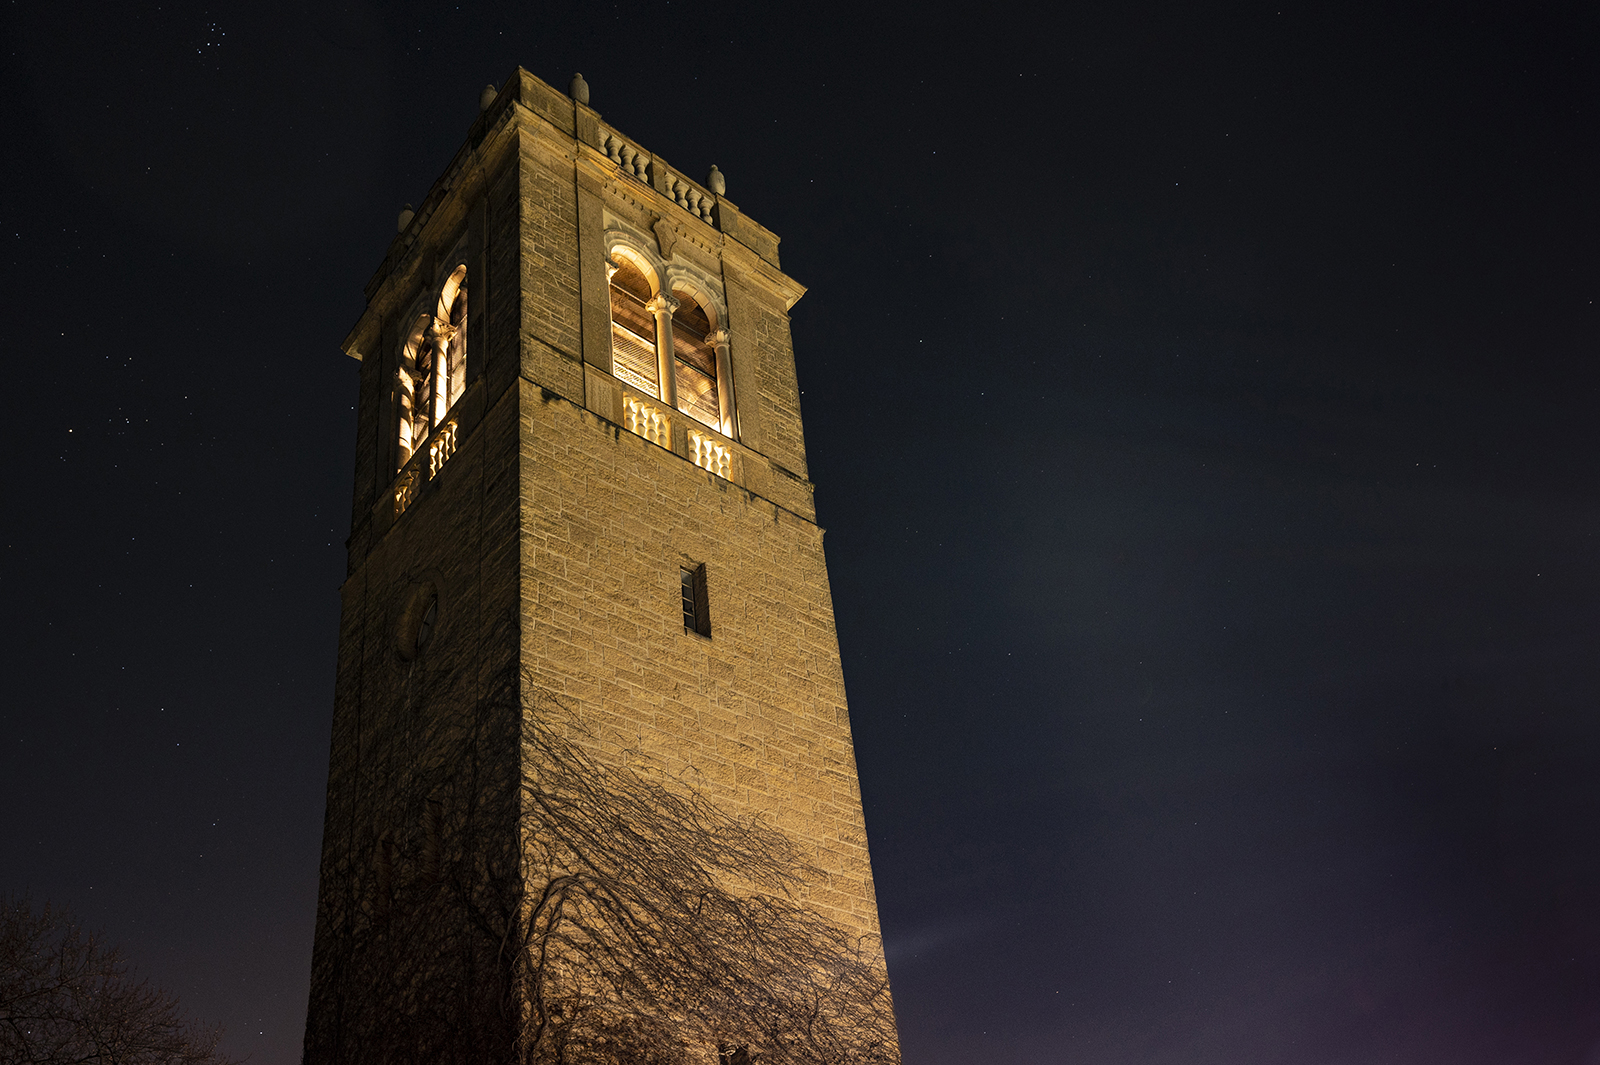 Carillon tower at nighttime